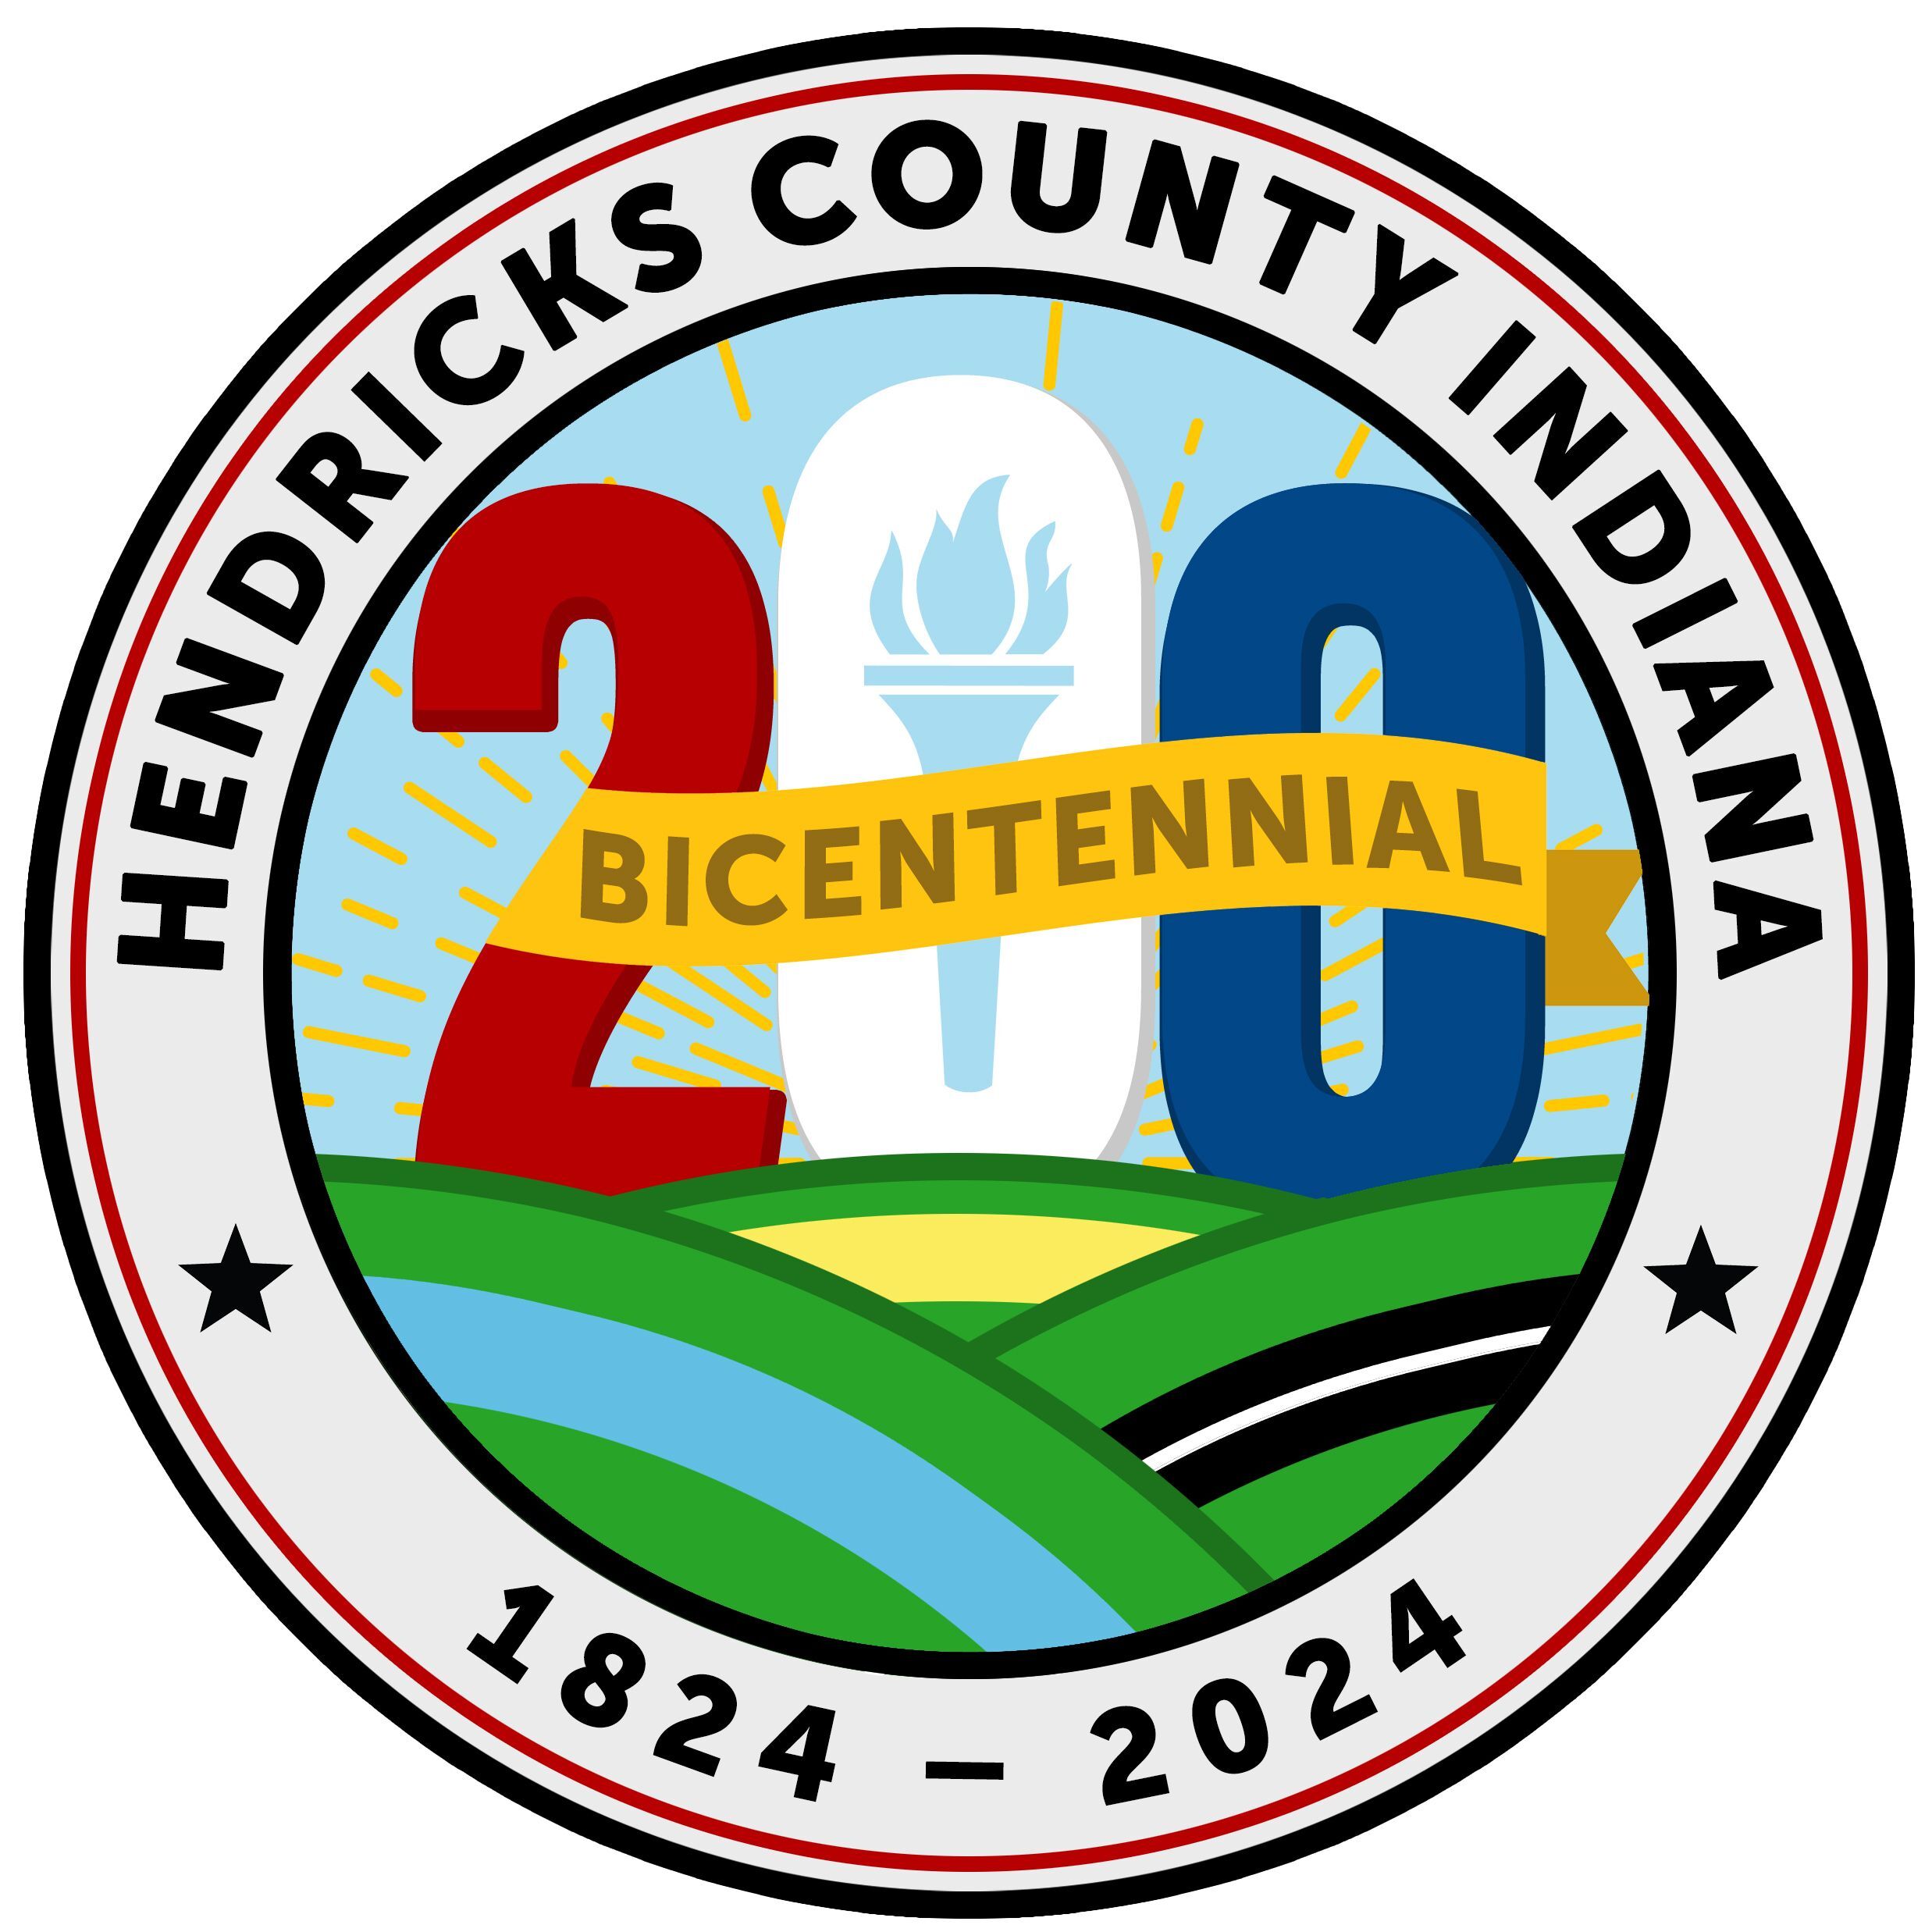 HCCF Awards $20,000 in Grants to Support Hendricks County Bicentennial